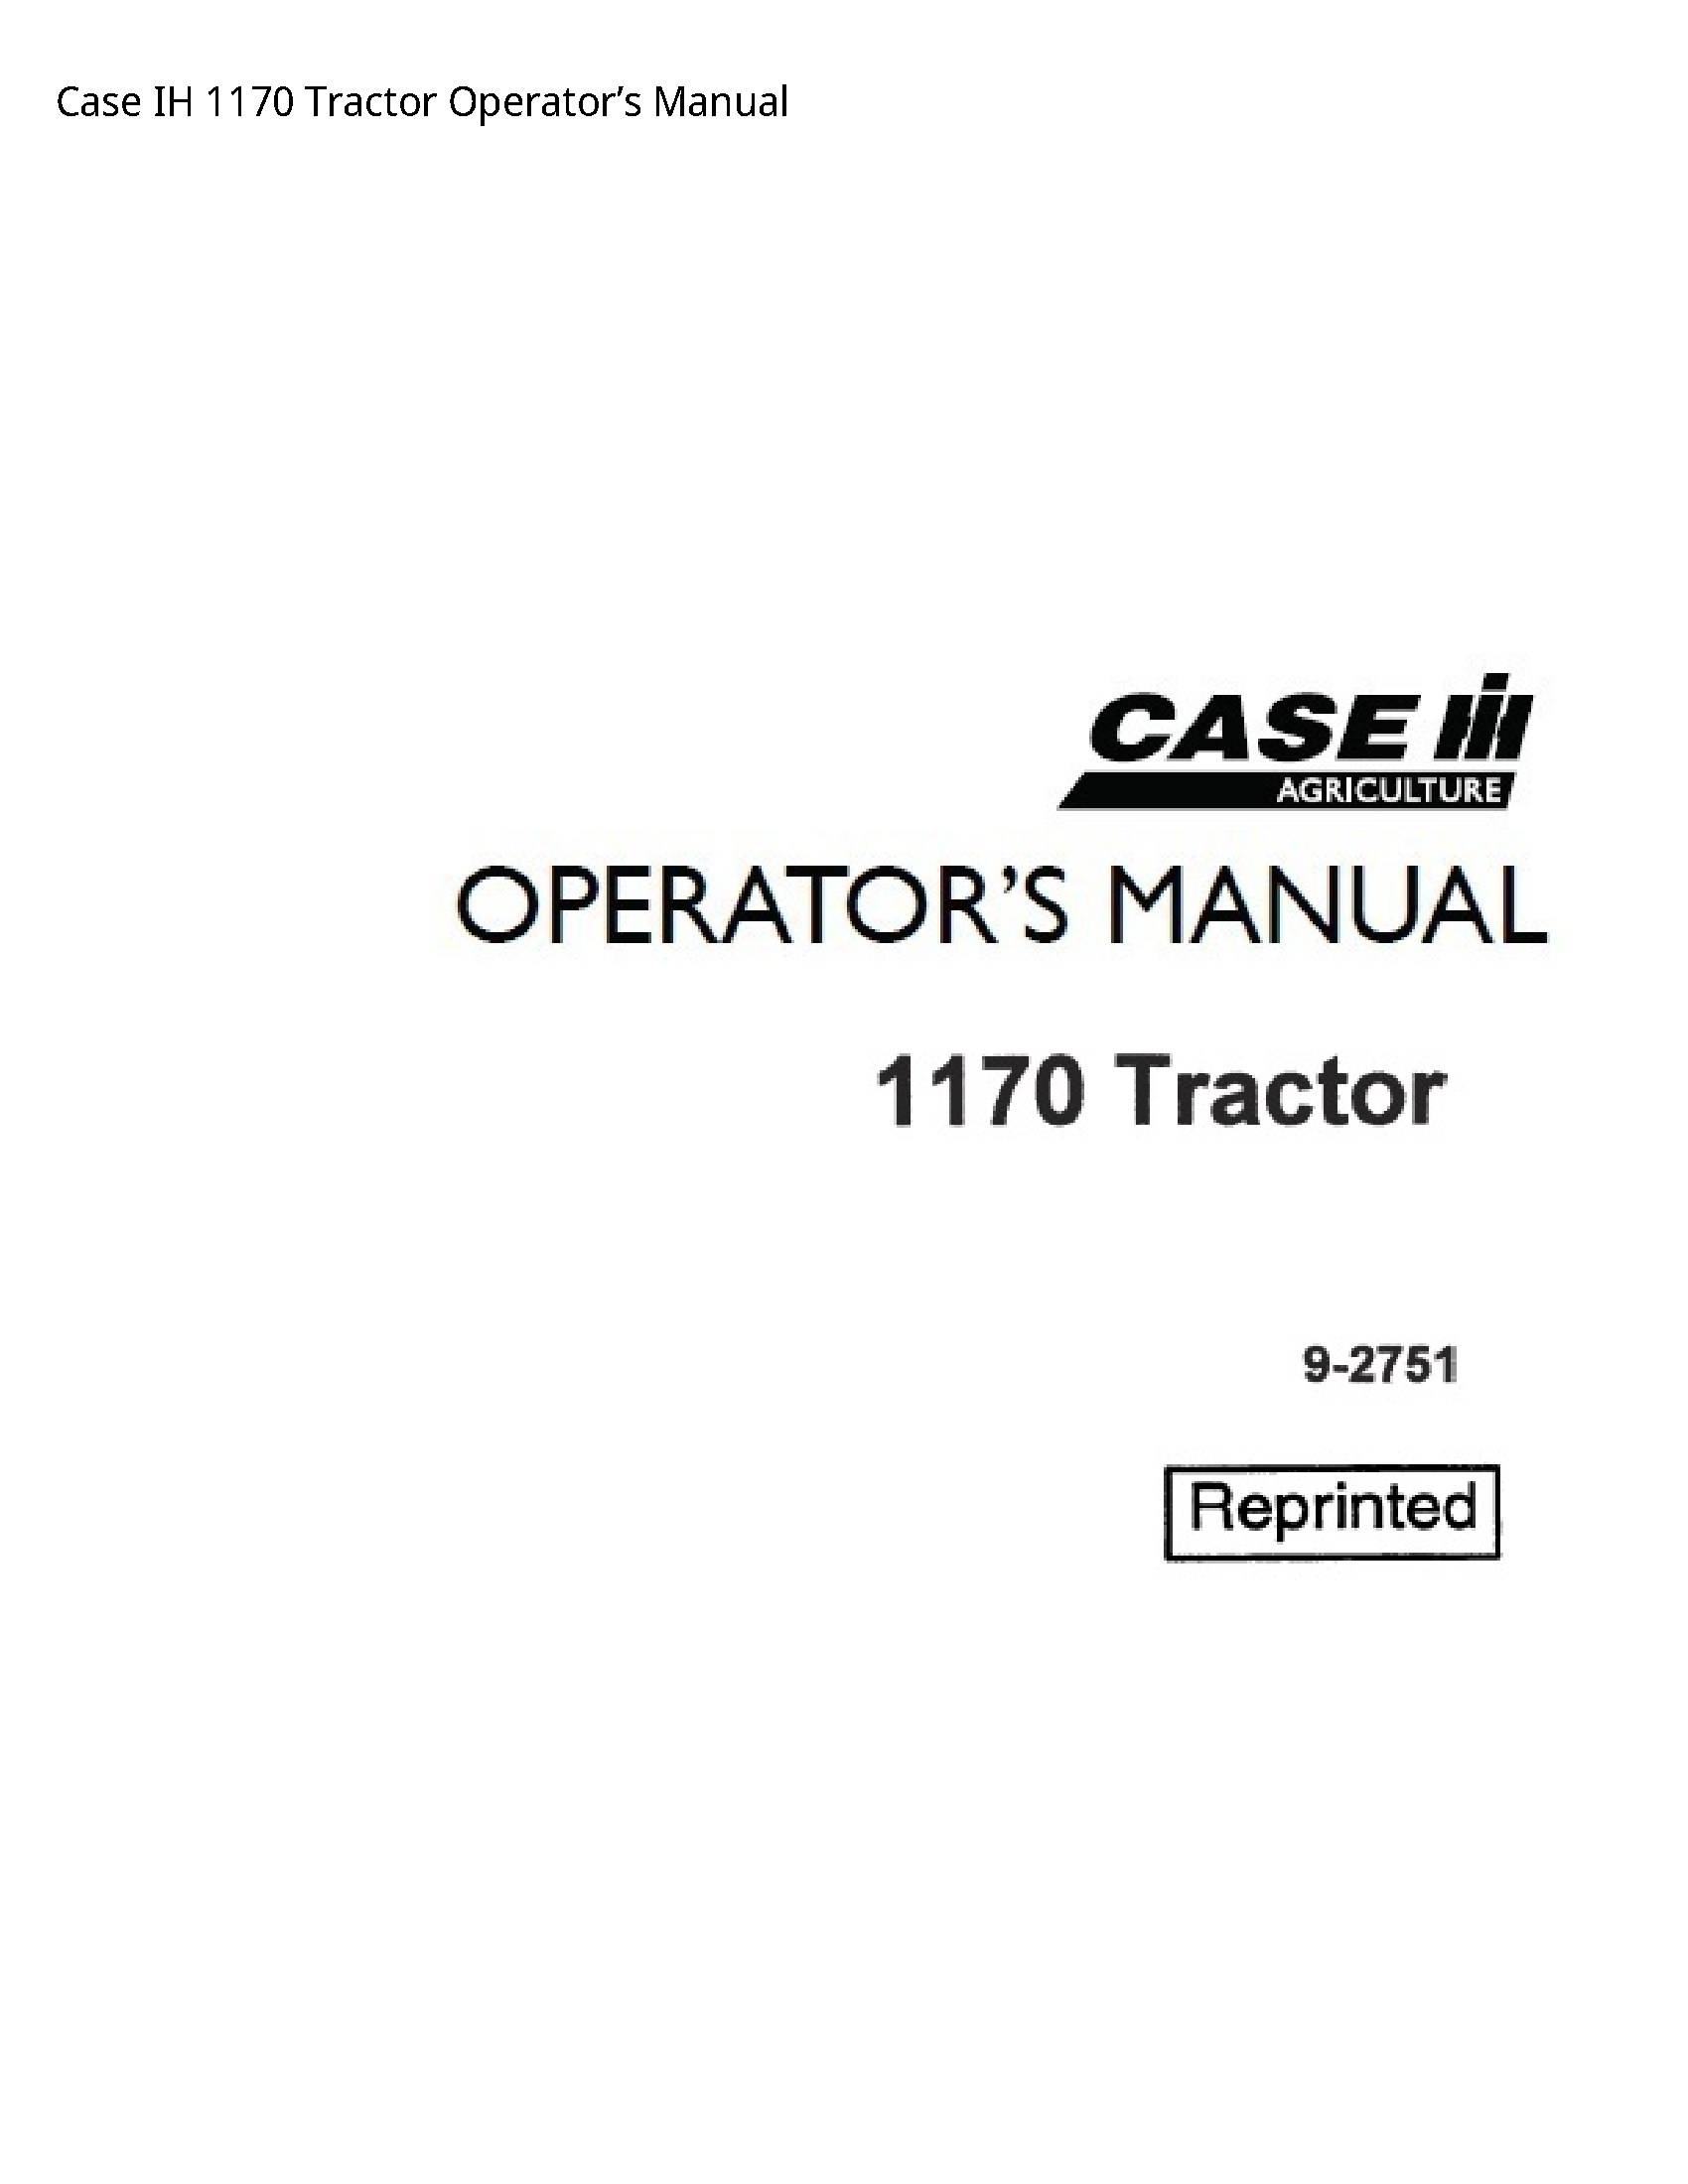 Case/Case IH 1170 IH Tractor Operator’s manual